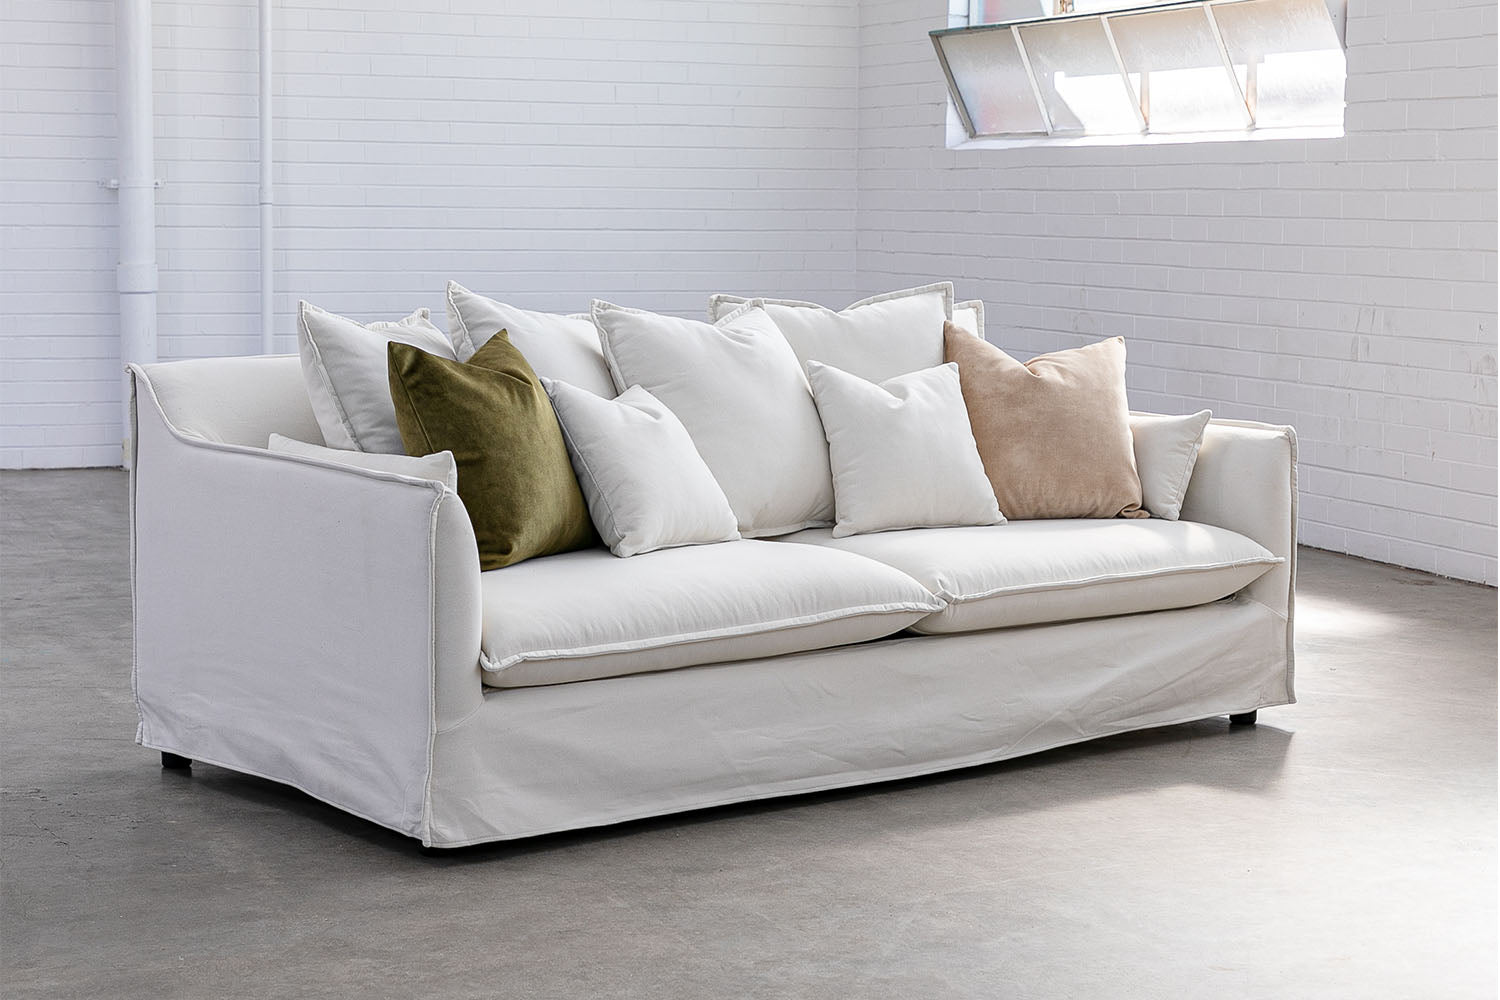 Why Choose a Fabric Sofa?